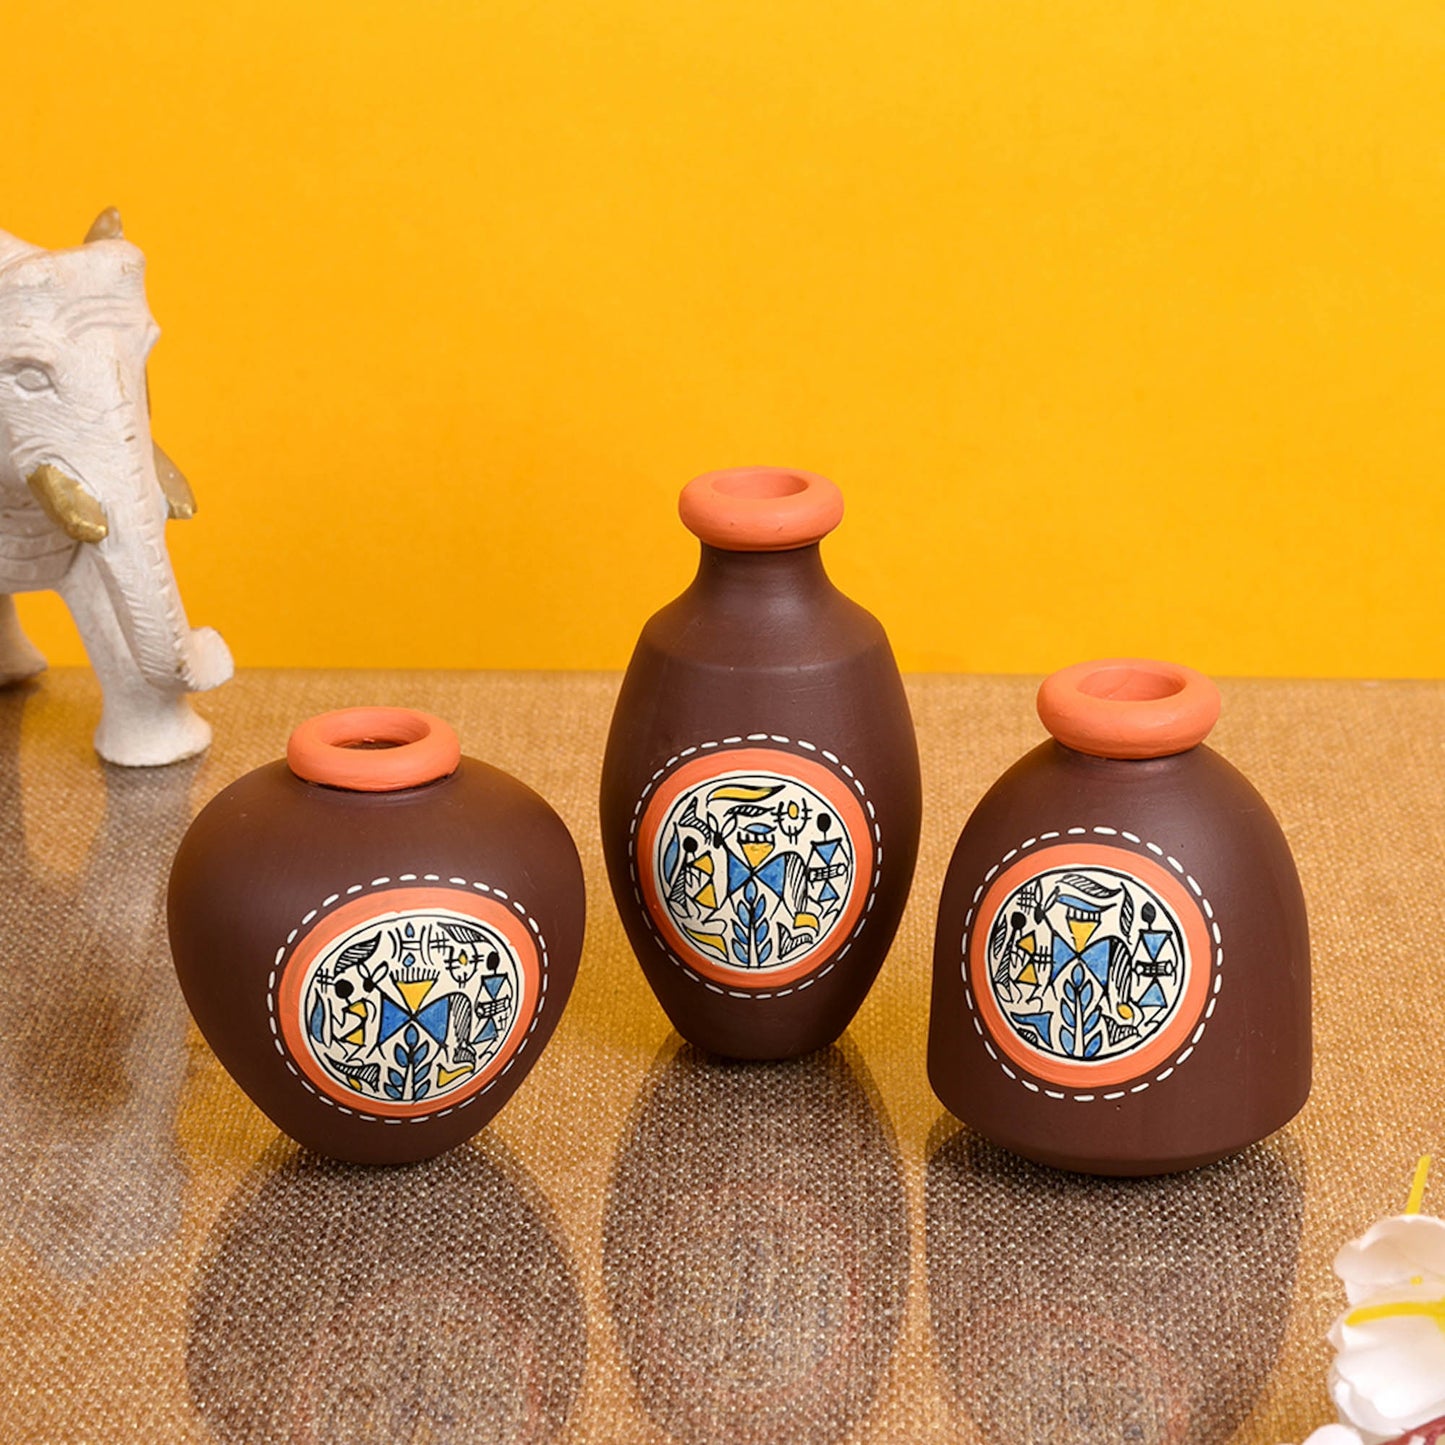 Vase Earthen Miniatures Brown Warli (So3) 2.6/3/2.4